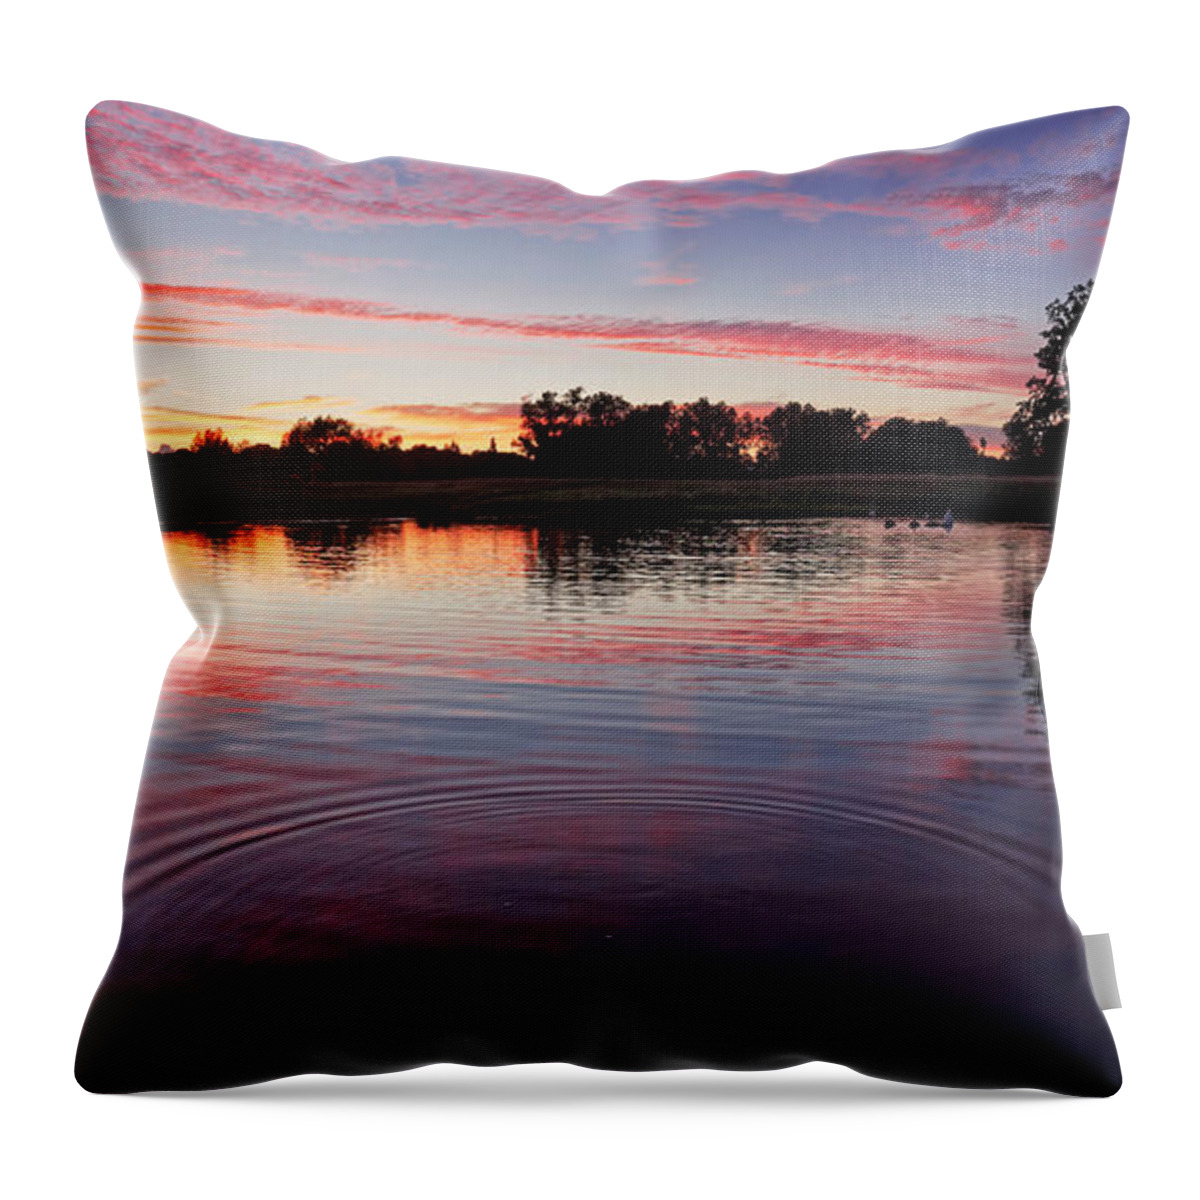 Sunset Throw Pillow featuring the photograph Shepherd Delight by Ian Merton